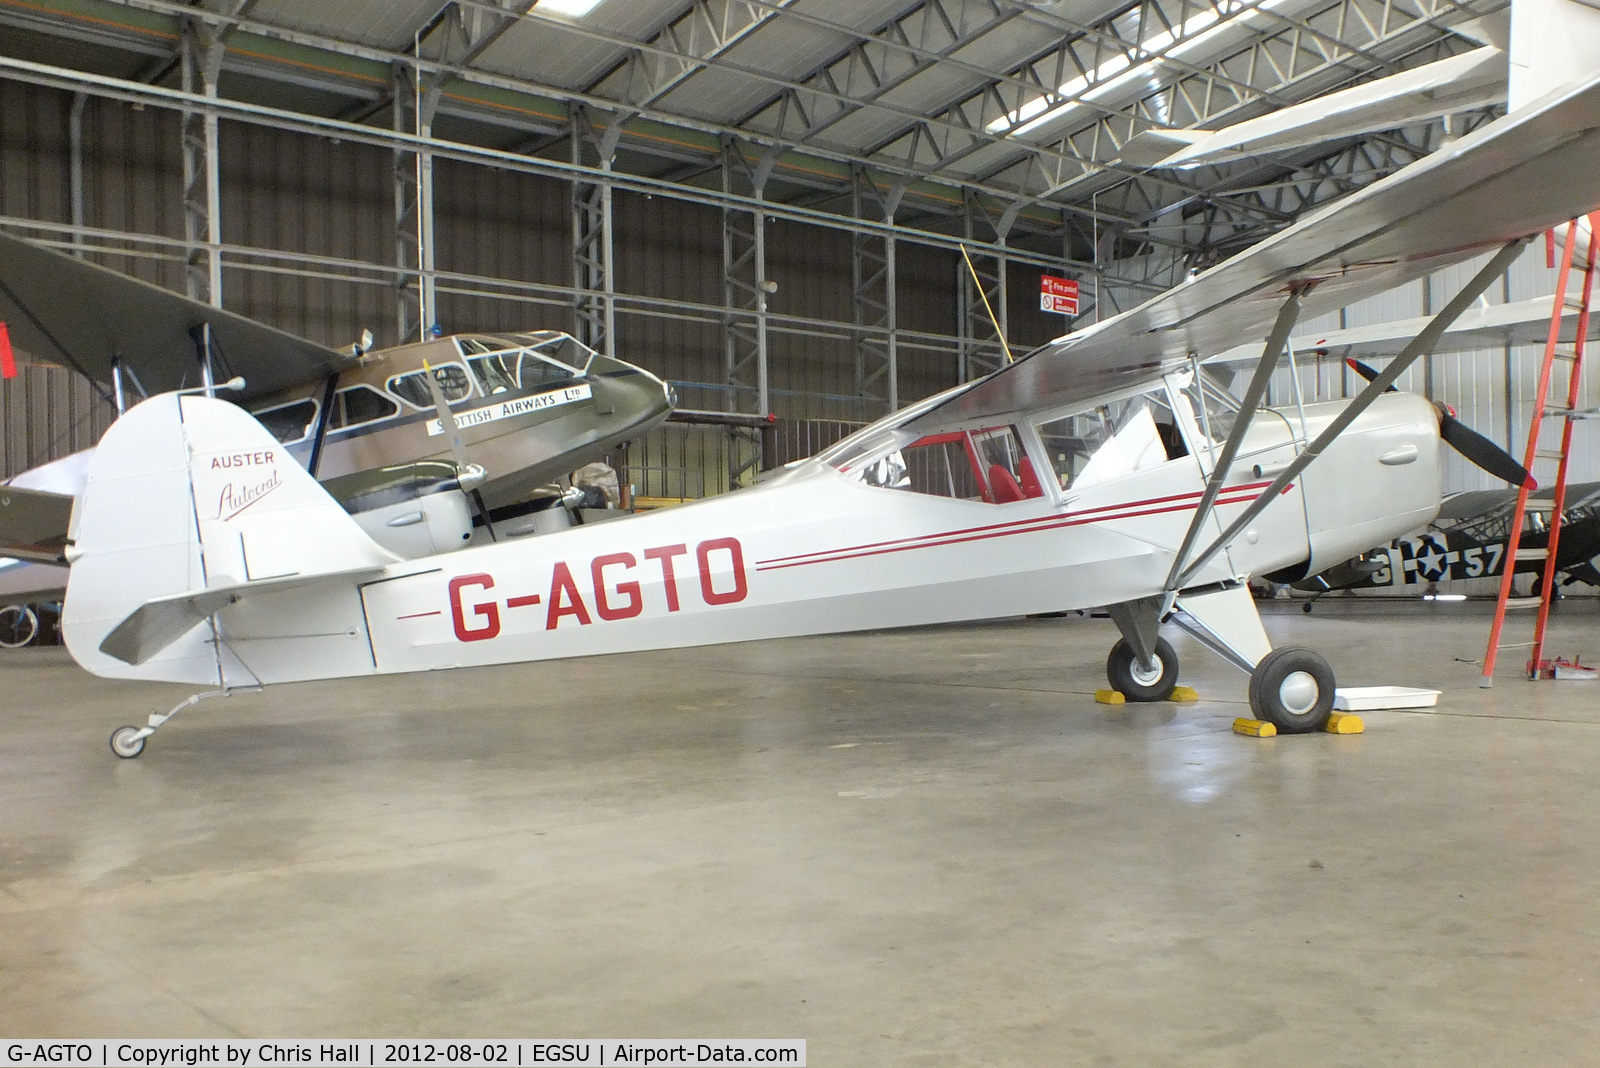 G-AGTO, 1945 Auster J-1 Autocrat C/N 1822, Hangared at the IWM Duxford